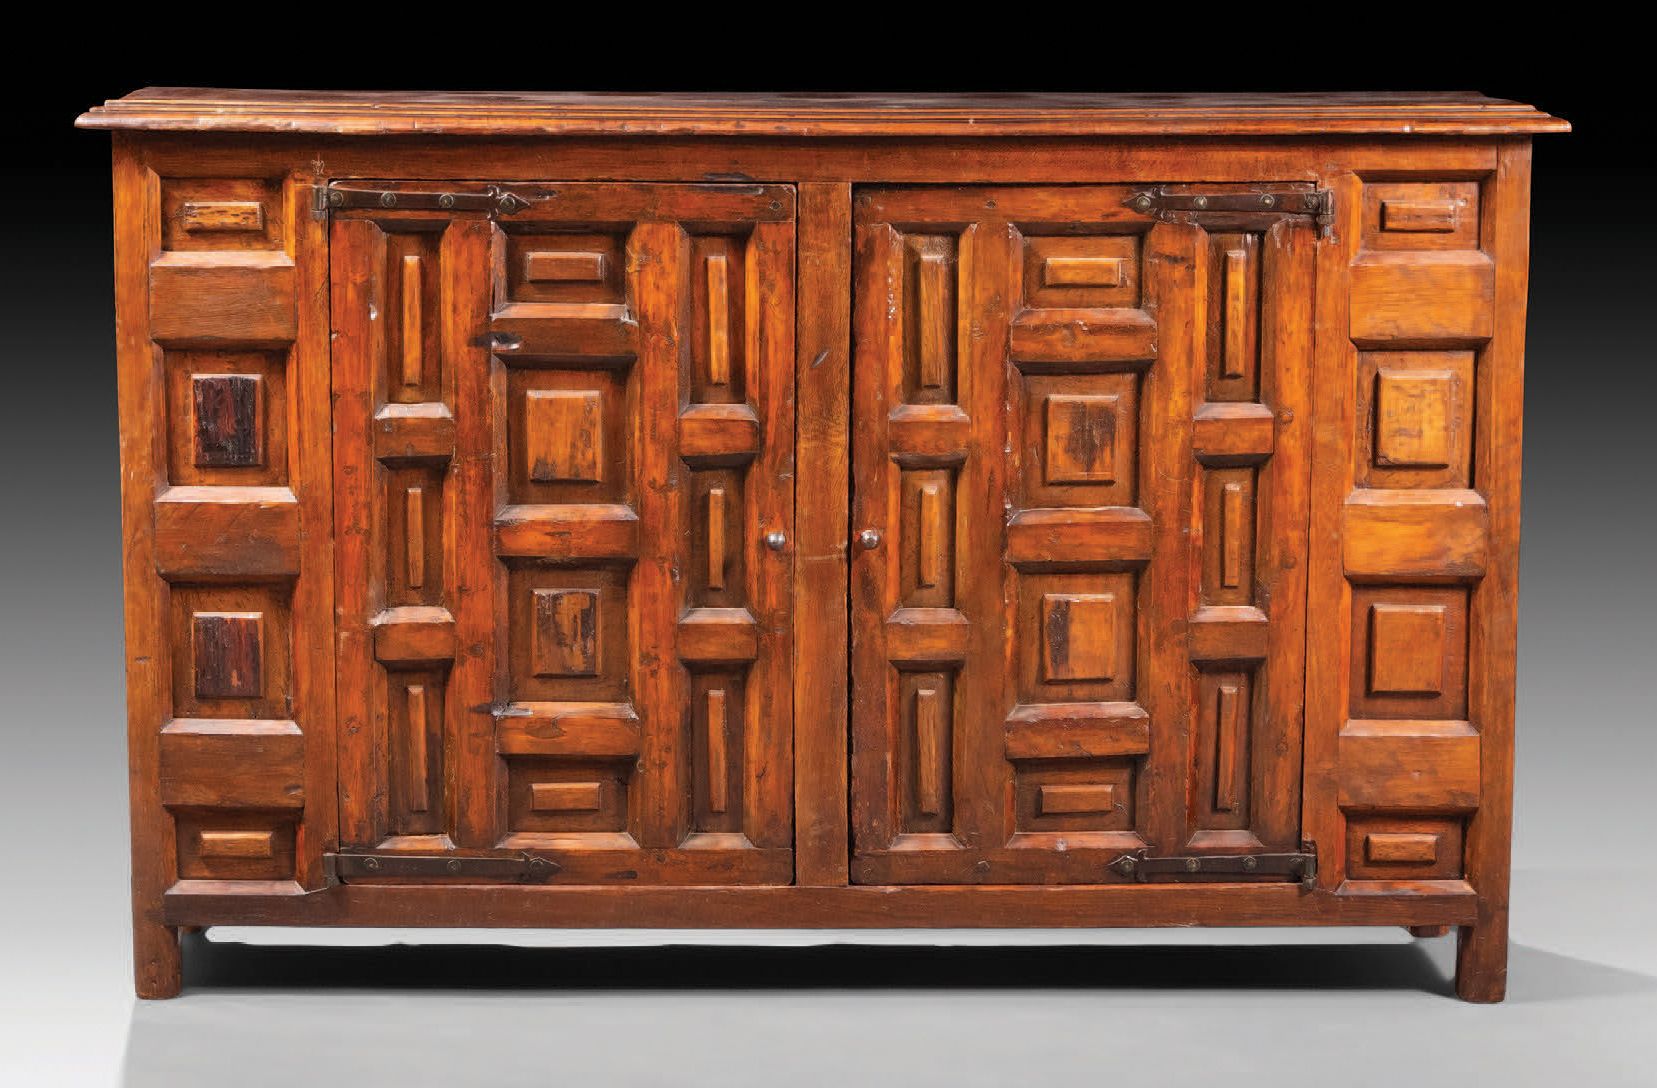 Null 大型橡木和软木餐具柜，两扇门上装饰有凸起的面板。
西班牙，17 世纪
H.118.5 厘米 - 190.6 厘米 - 47 厘米
修复